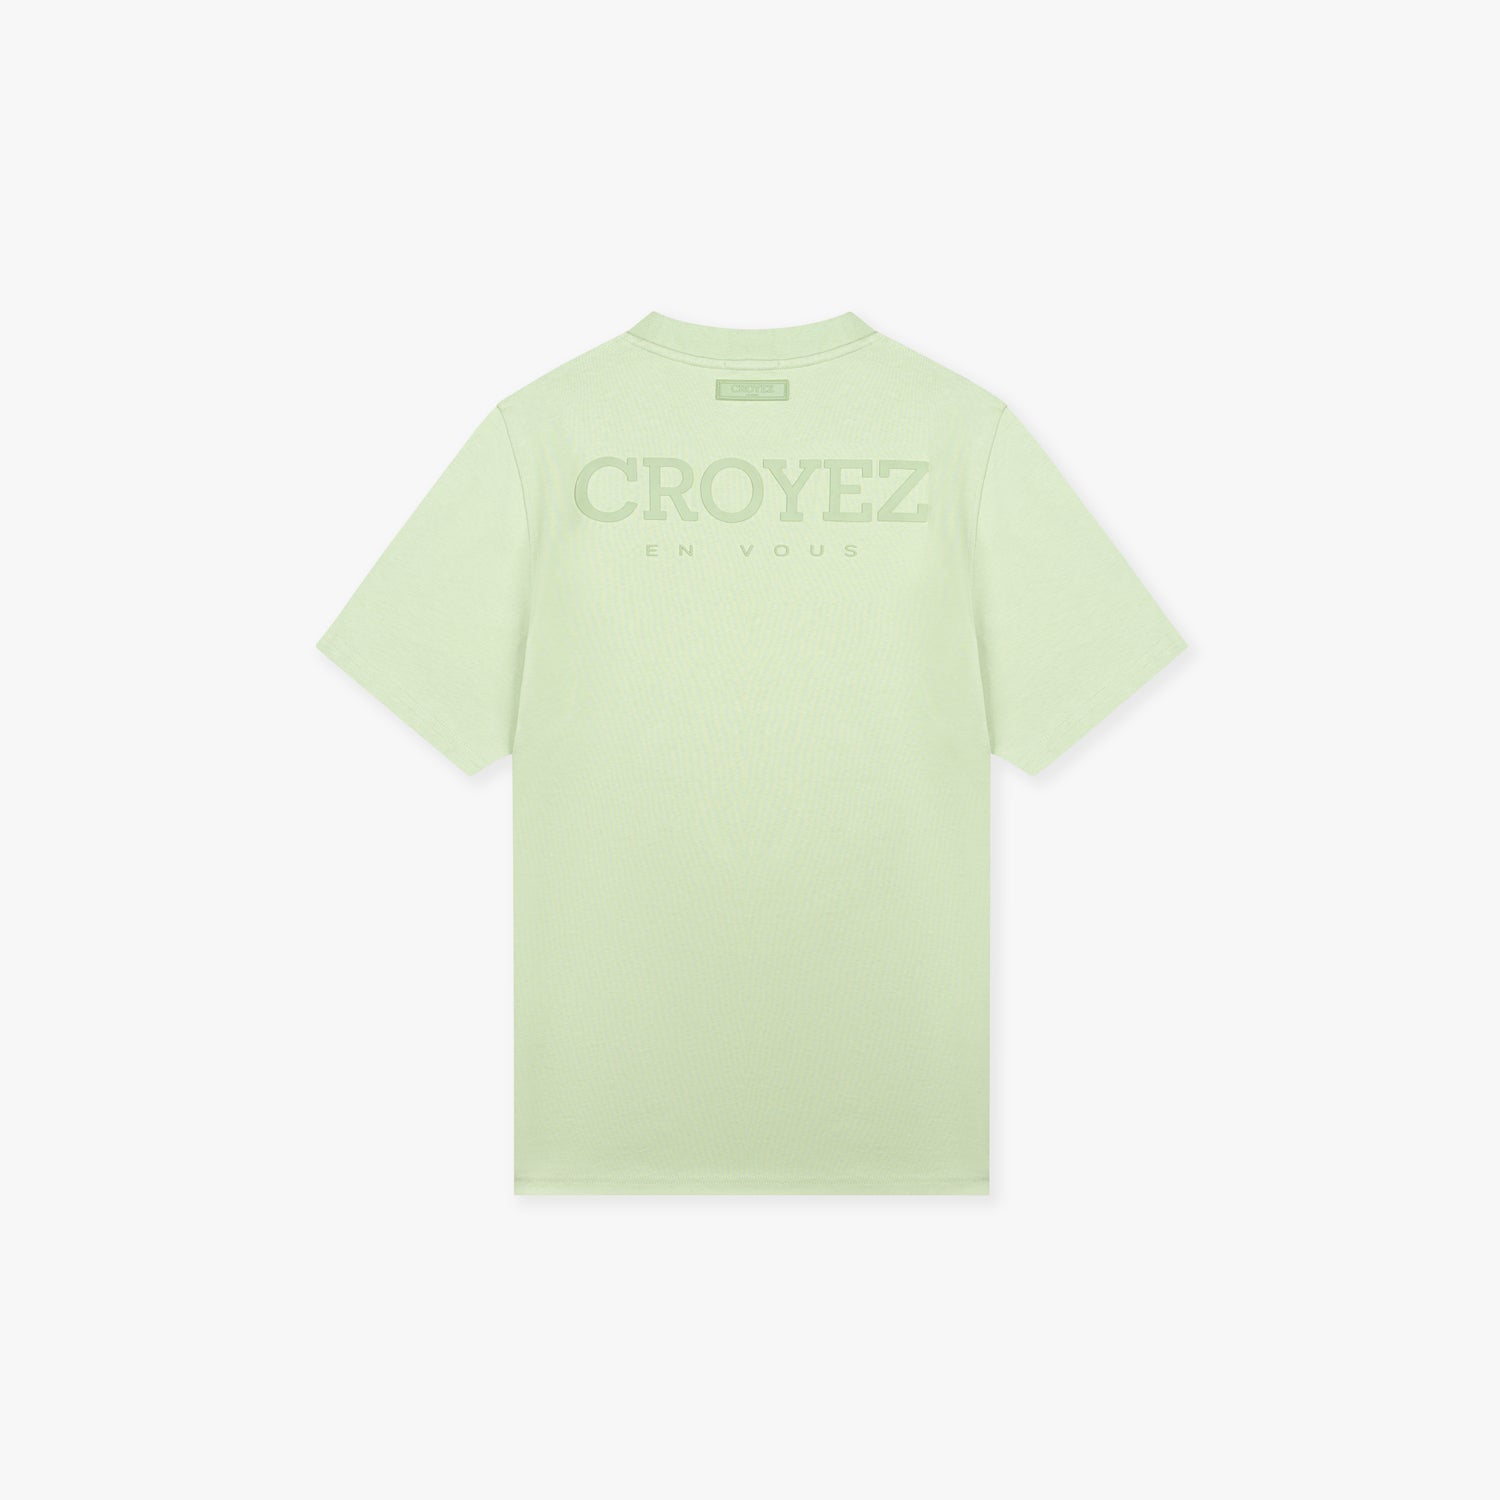 CROYEZ ABSTRACT T-SHIRT - GREEN